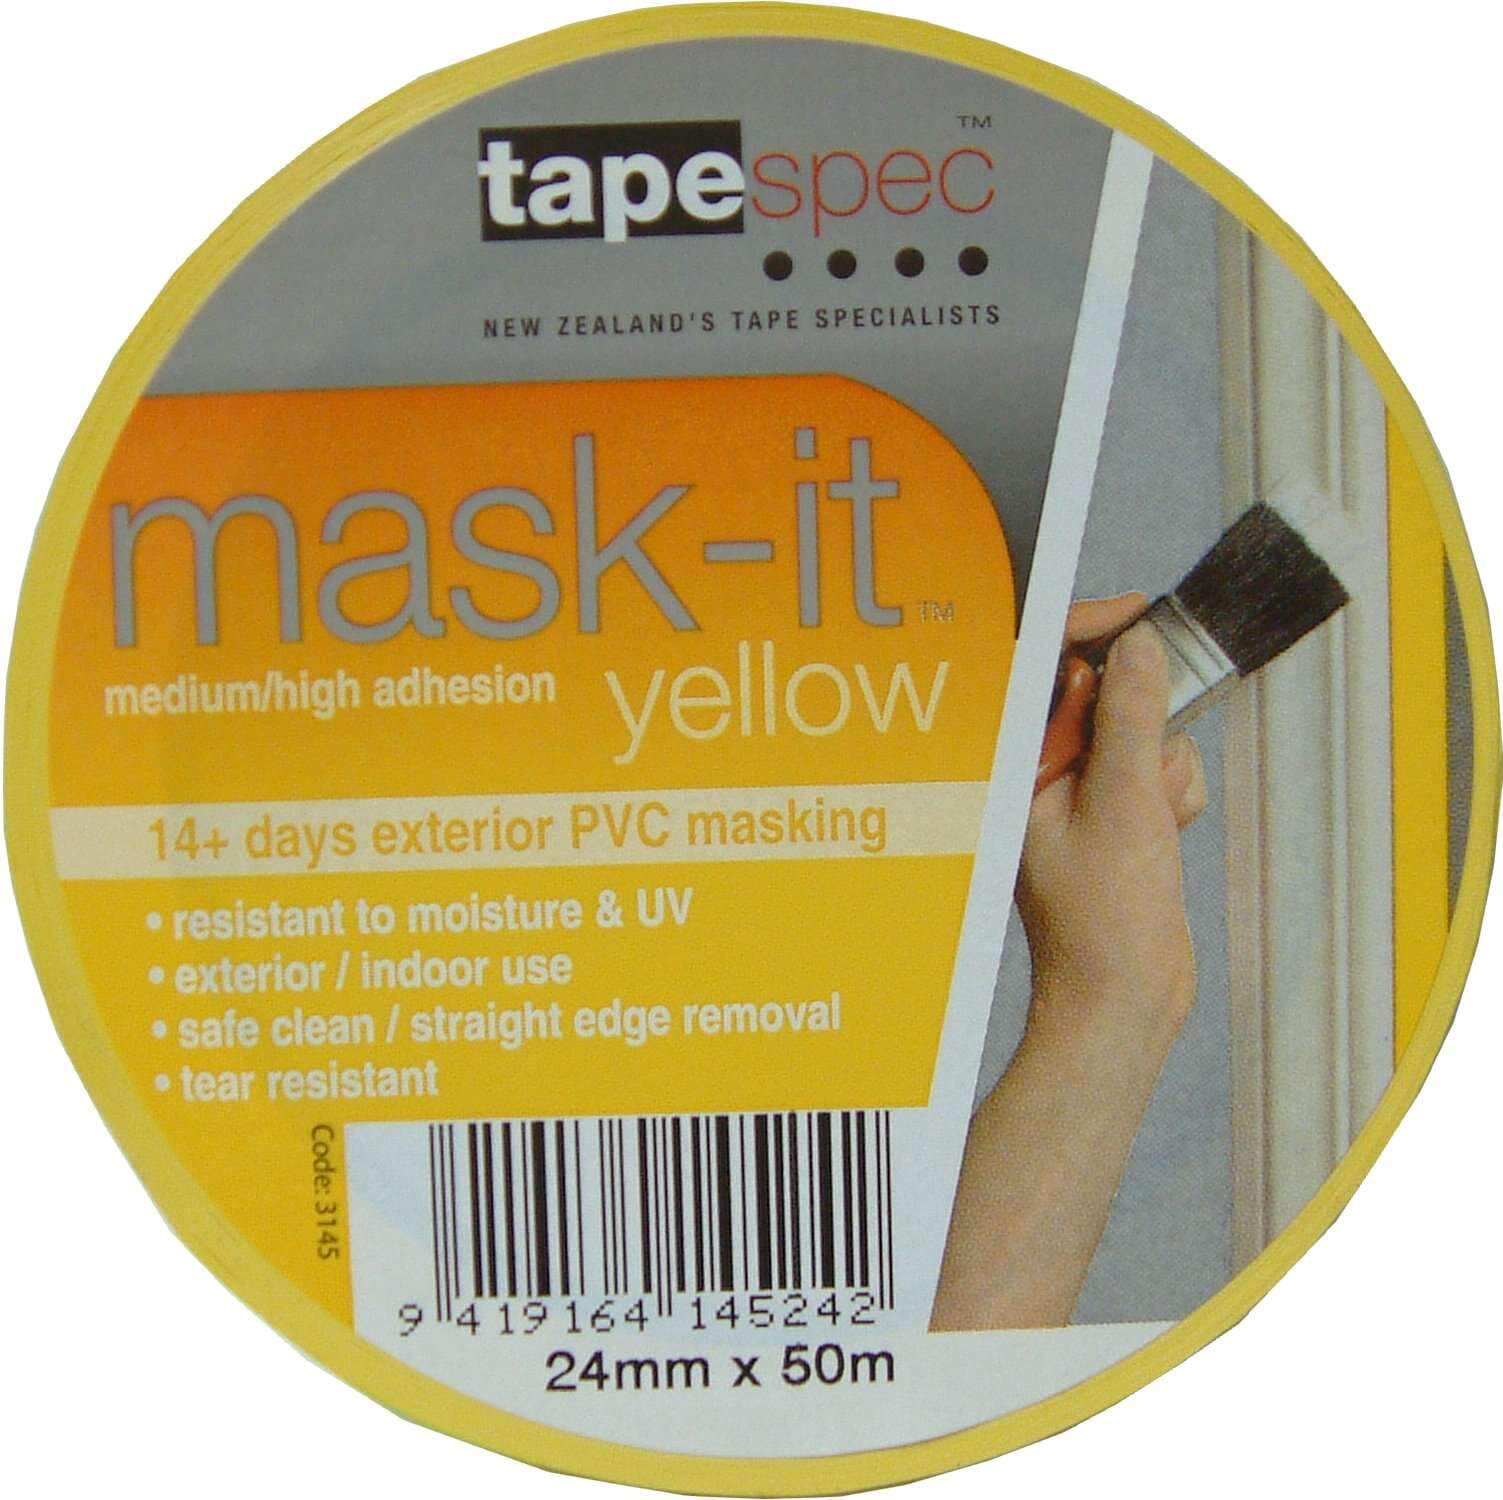 Tapespec Masking Tape - PVC Exterior Yellow 50m Roll 24mm Mask-it